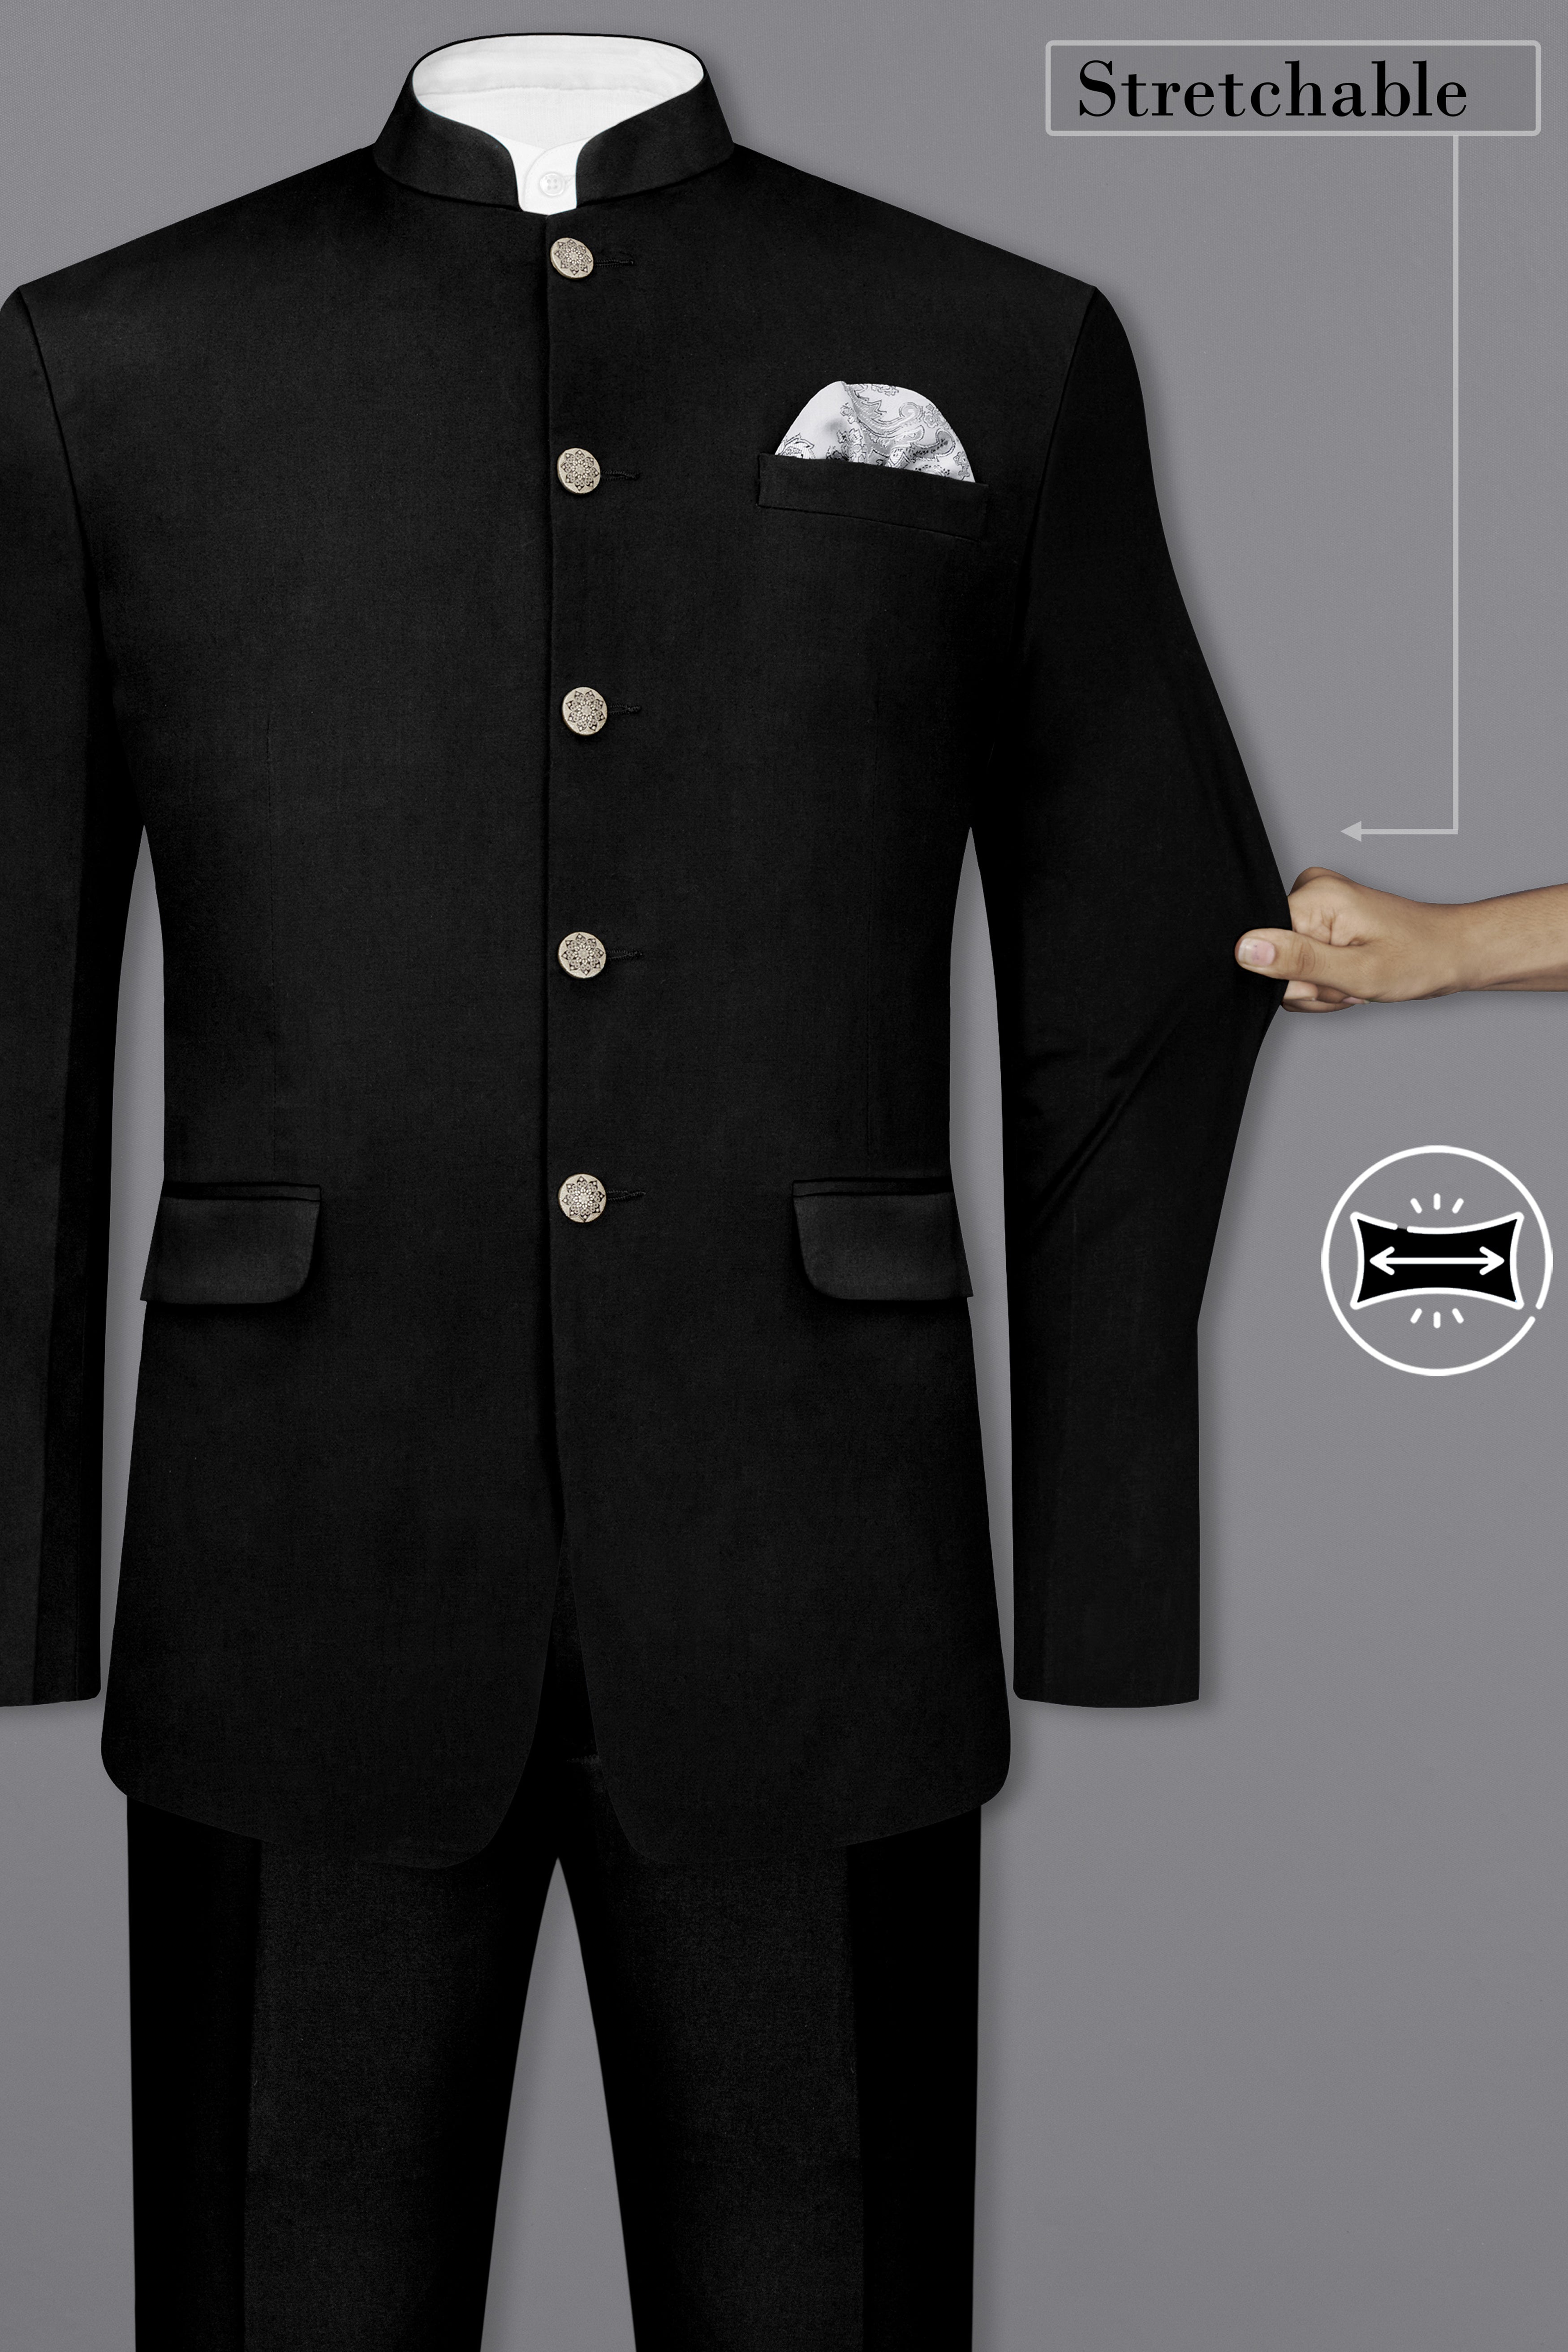 Jade Black Solid Premium Cotton Bandhgala Stretchable Traveler Suit